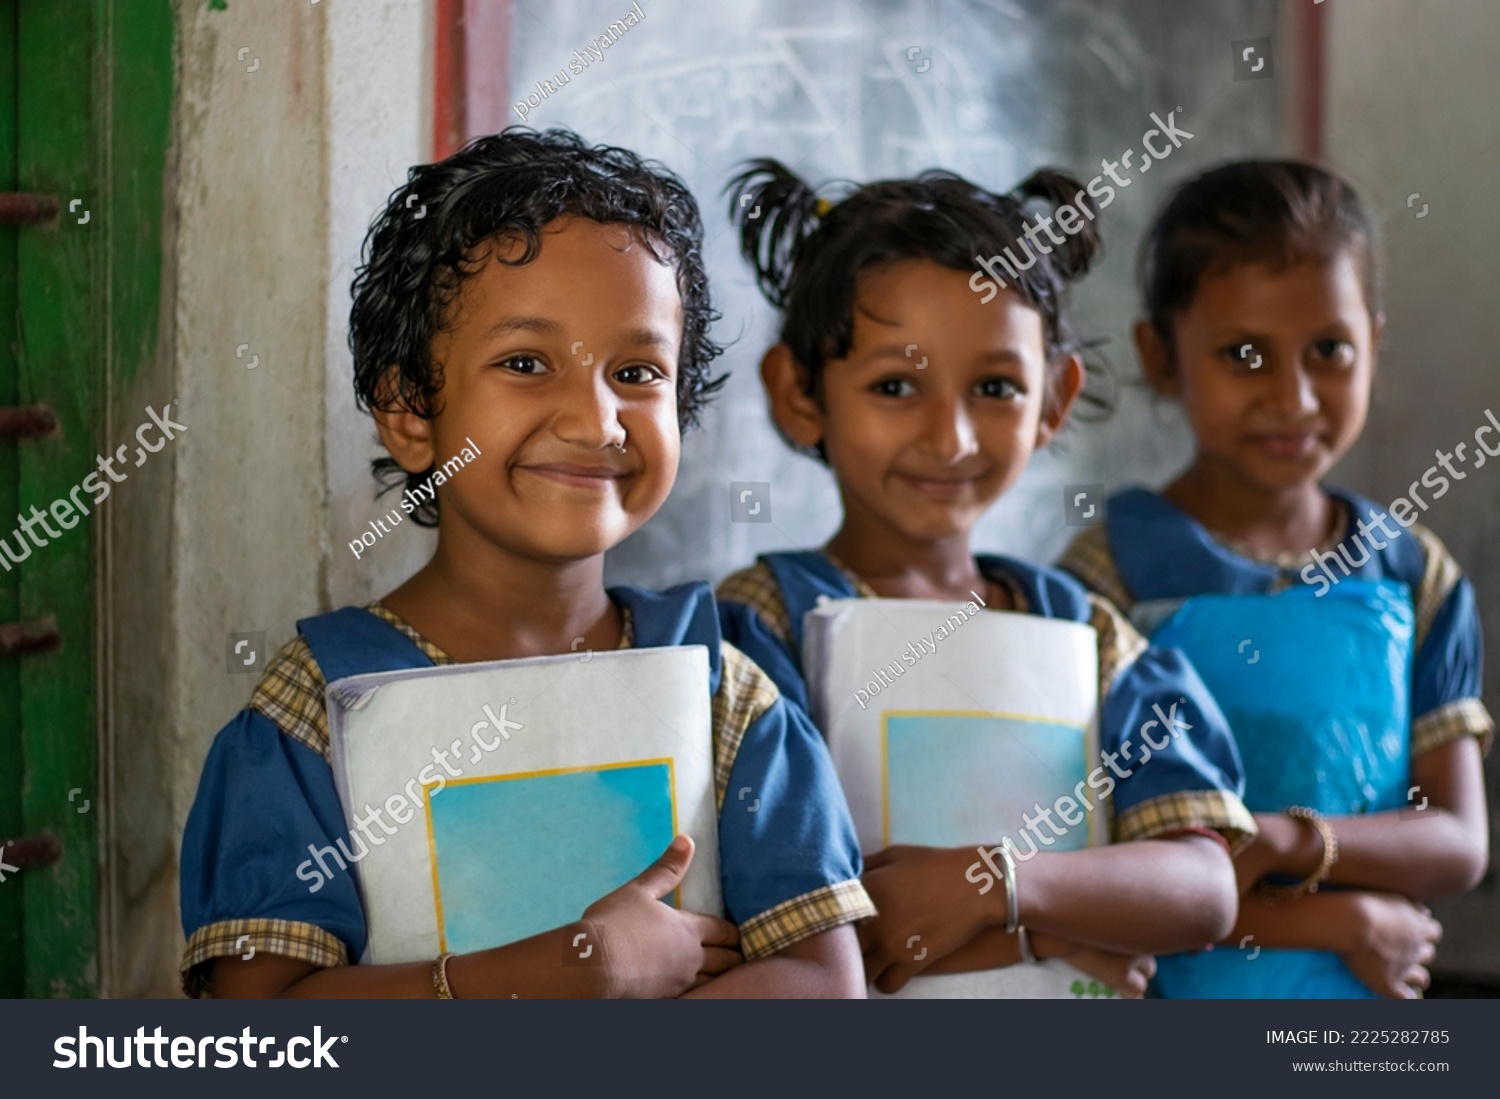 Three School Children's holding books standing at school #2225282785